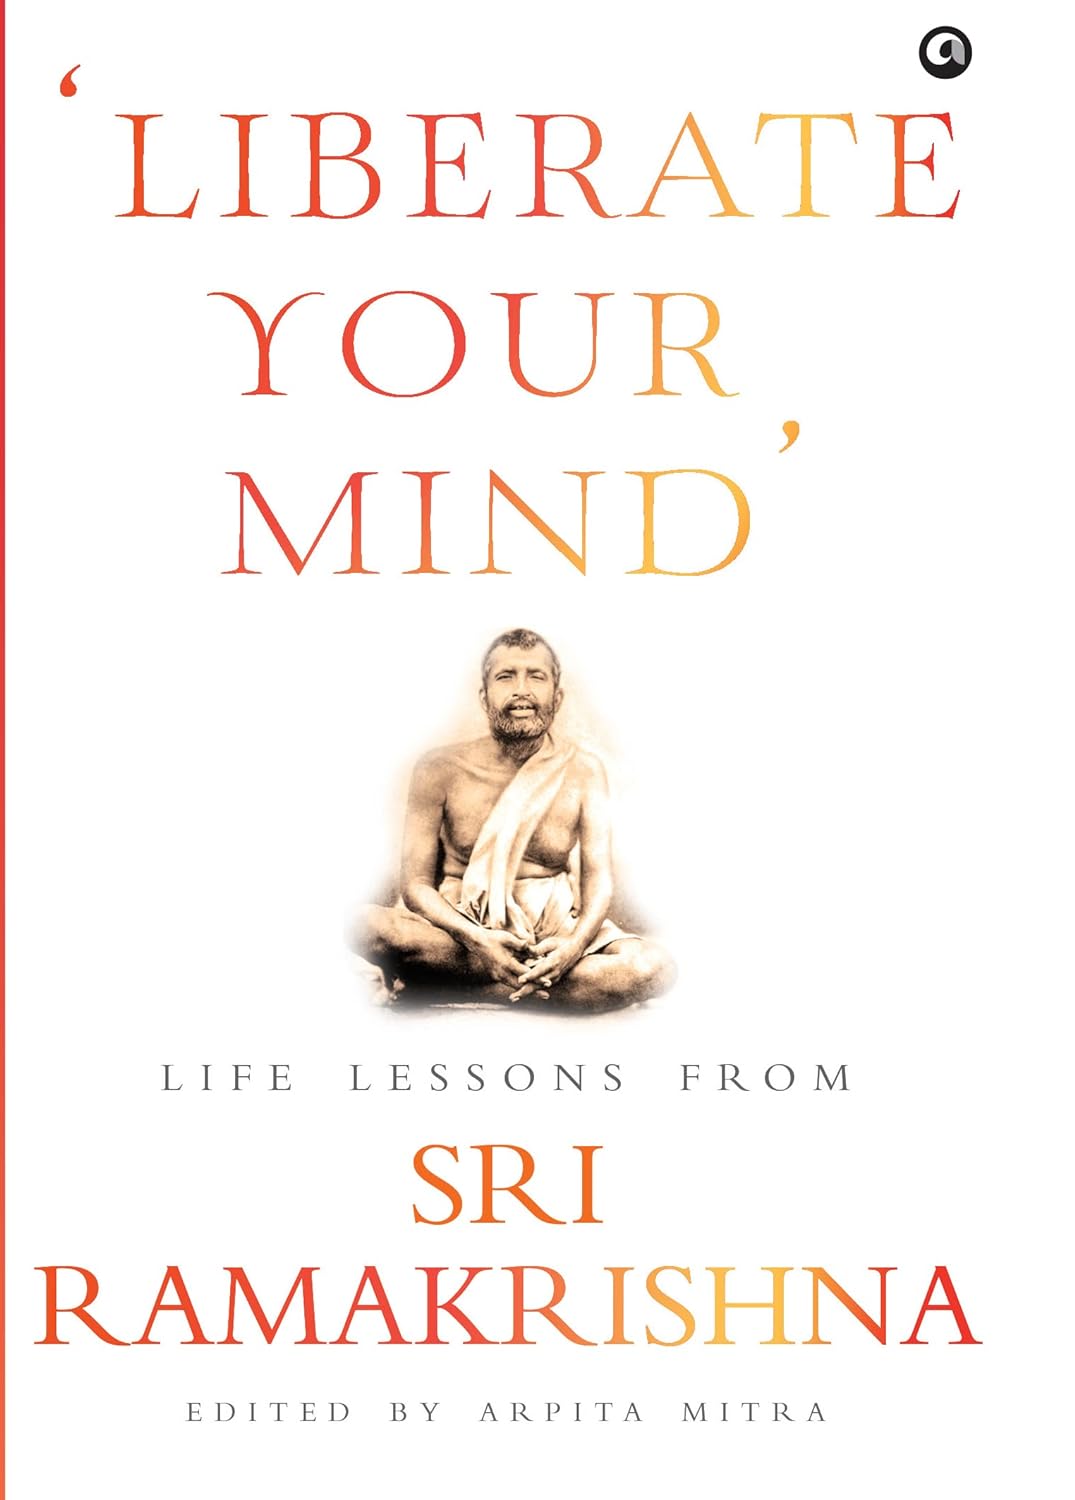 ‘Liberate Your Mind’ Life Lessons From Sri Ramakrishna